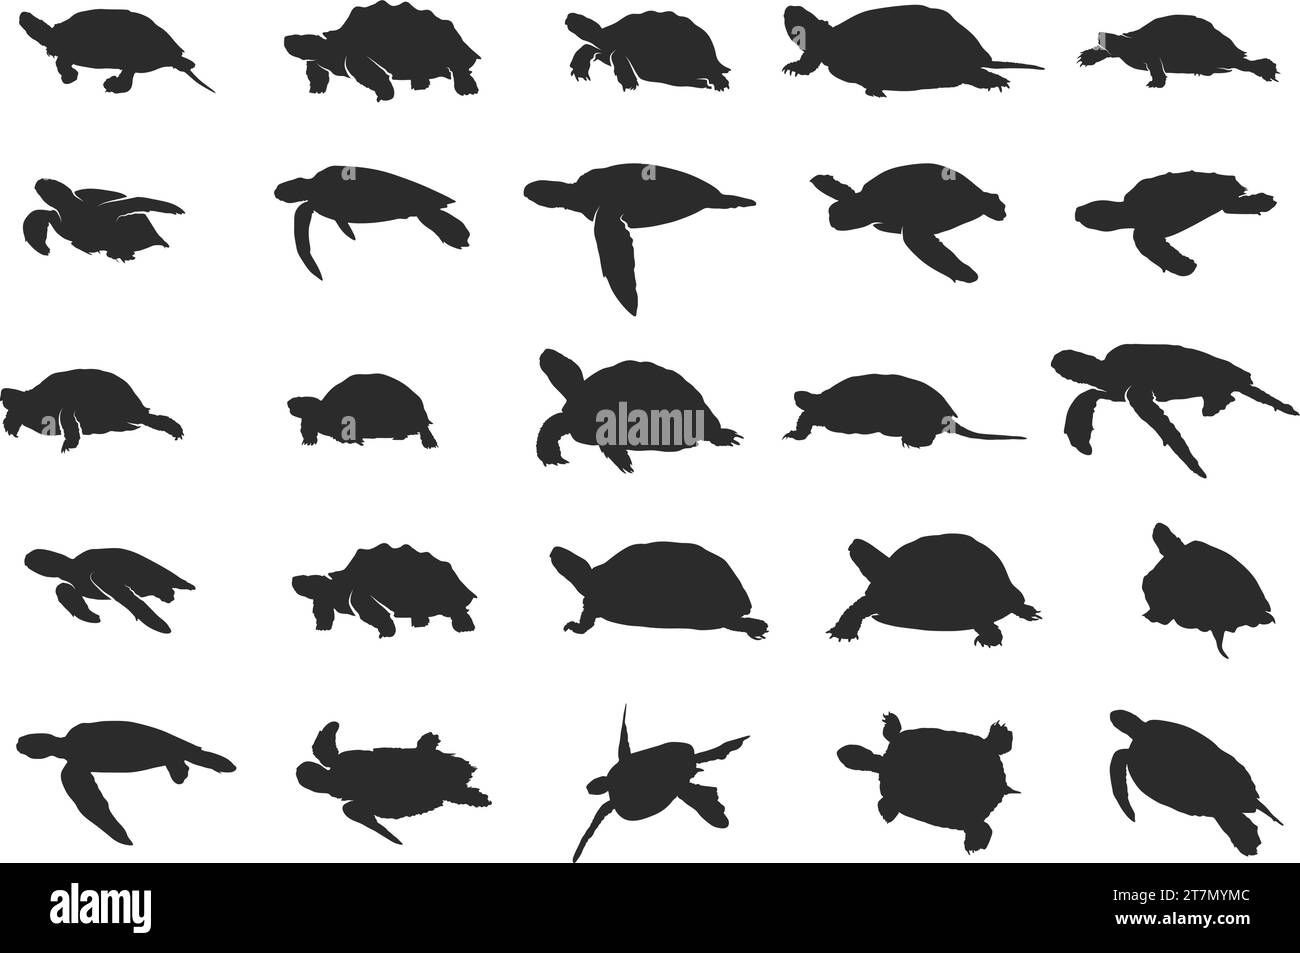 Turtle silhouette, Sea turtle silhouettes, Turtle icon set, Turtle clipart, Underwater animal set. Stock Vector